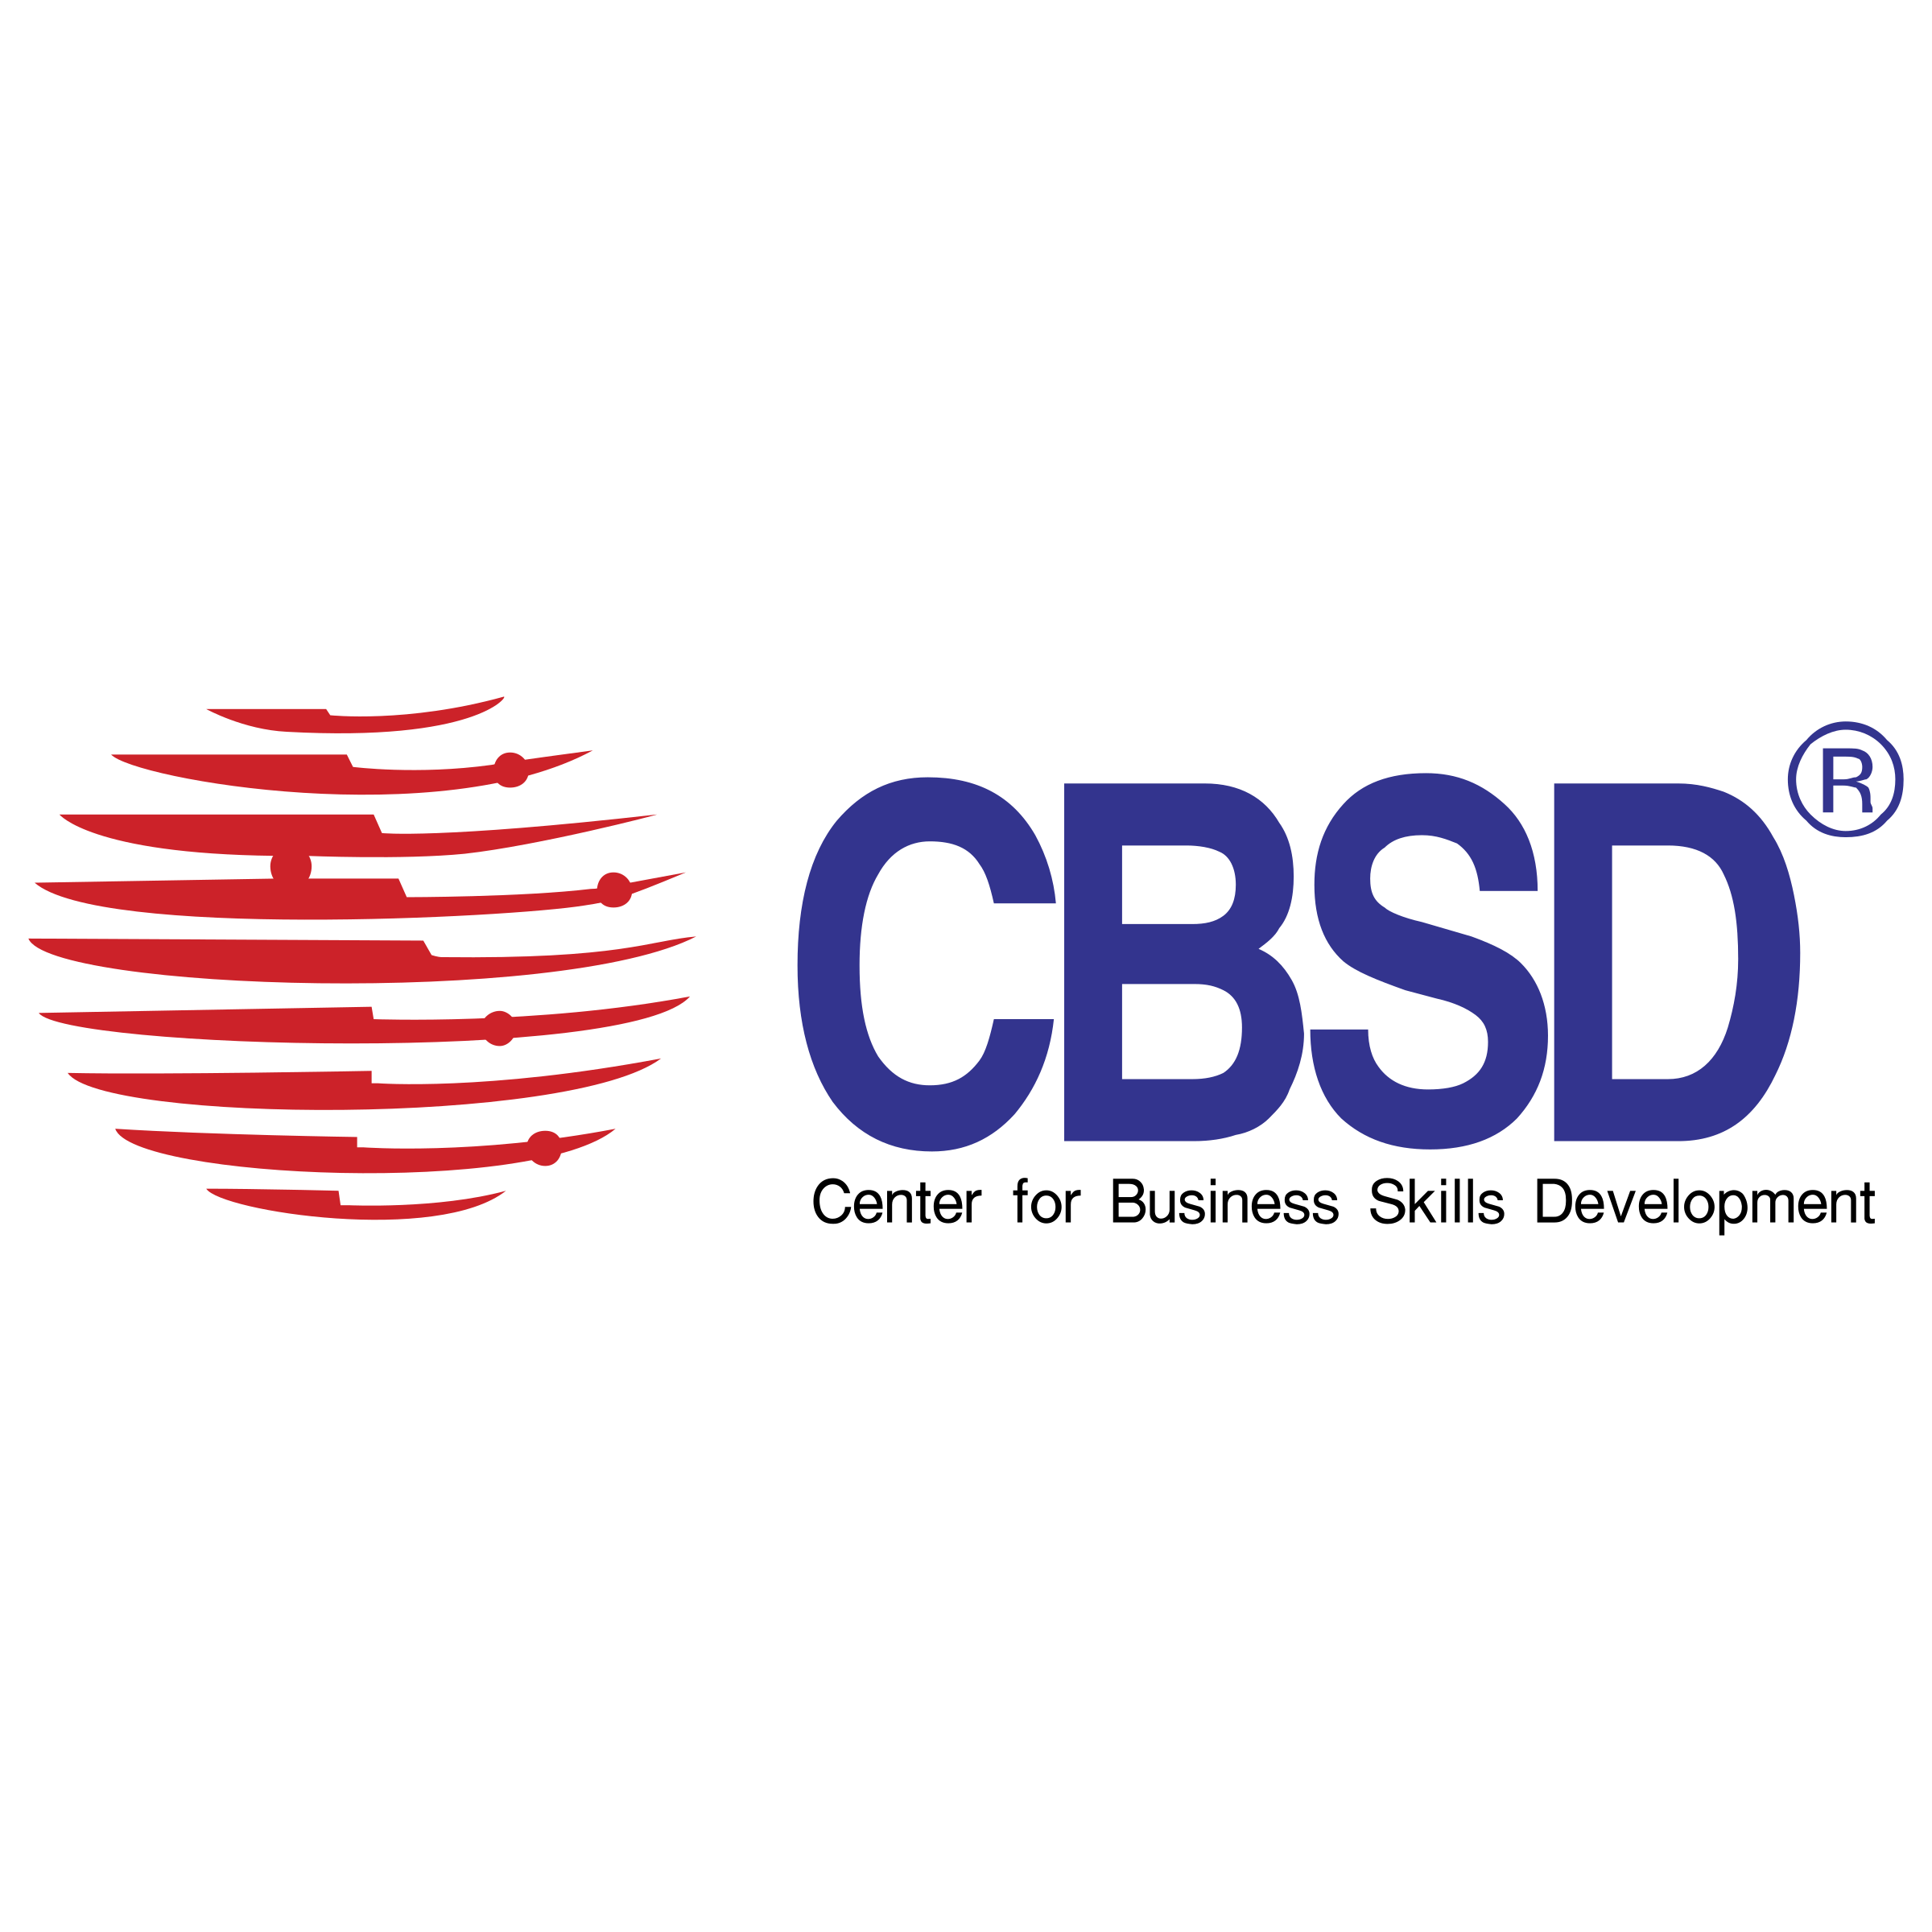 Cbsd Logo - CBSD Logo PNG Transparent & SVG Vector - Freebie Supply